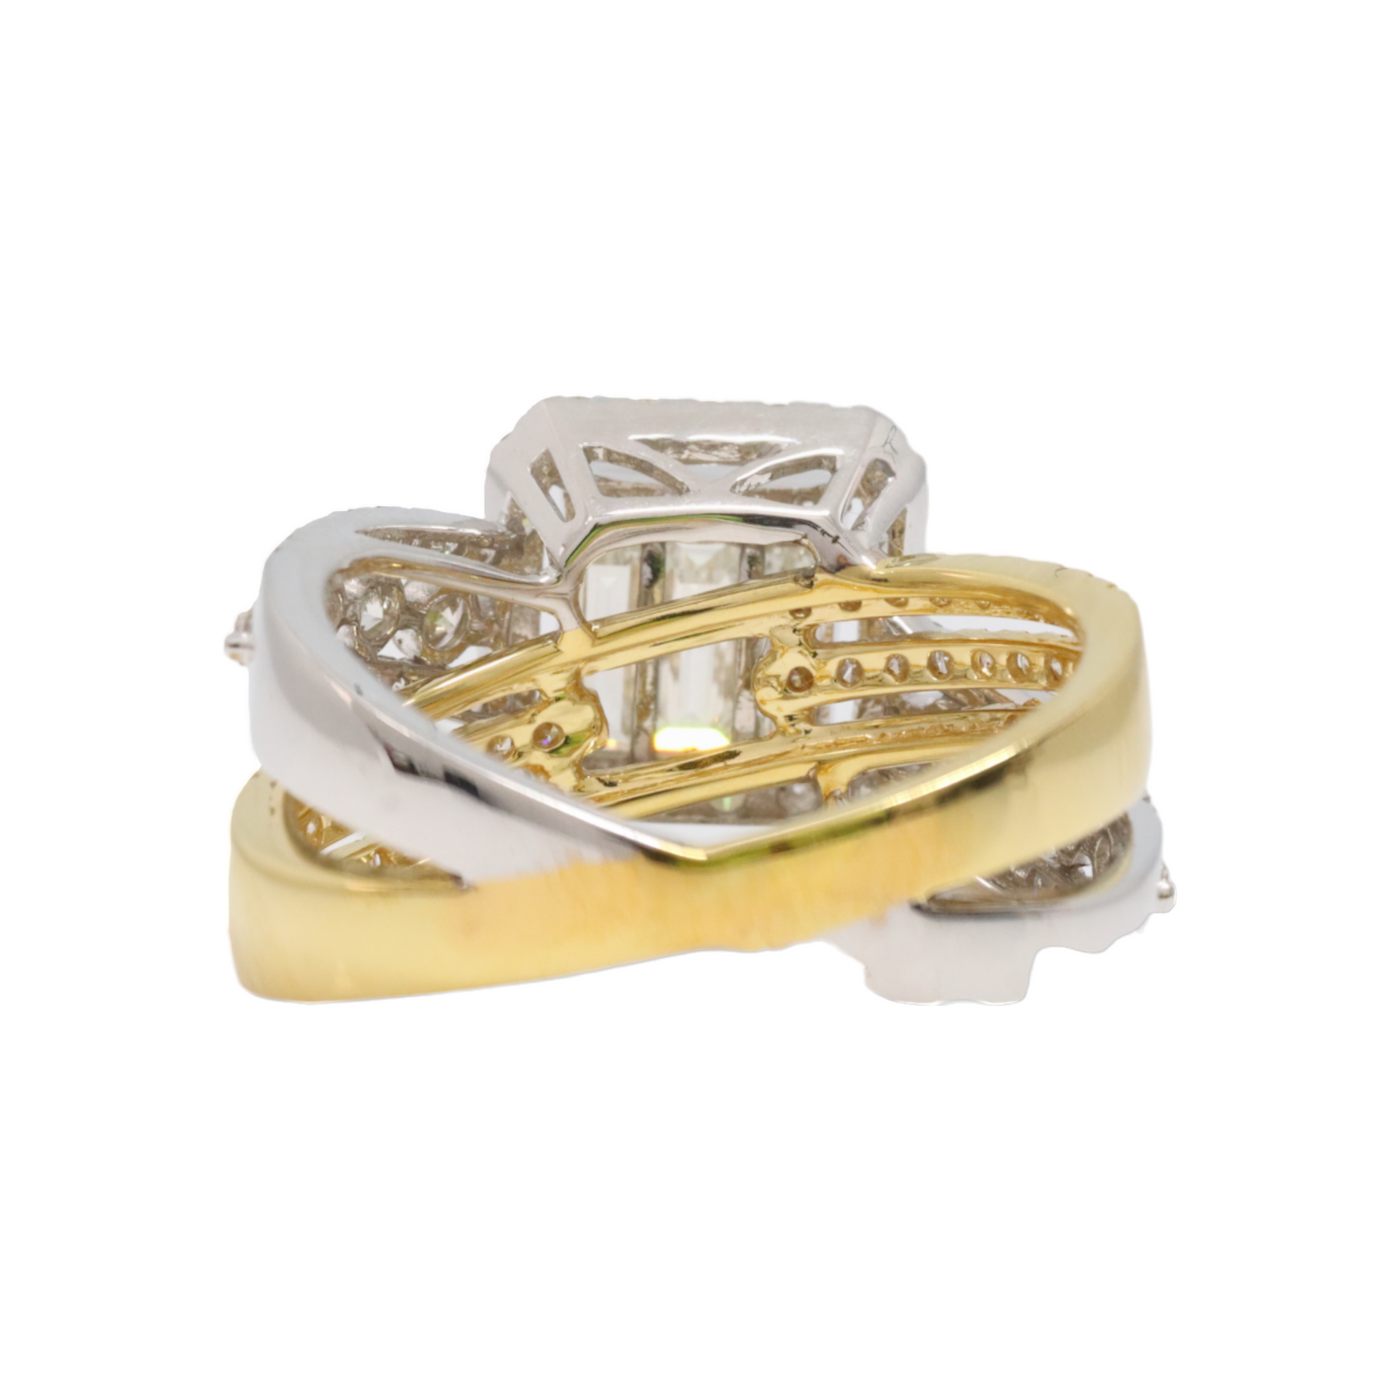 18ct White and Yellow Gold Diamond dress ring